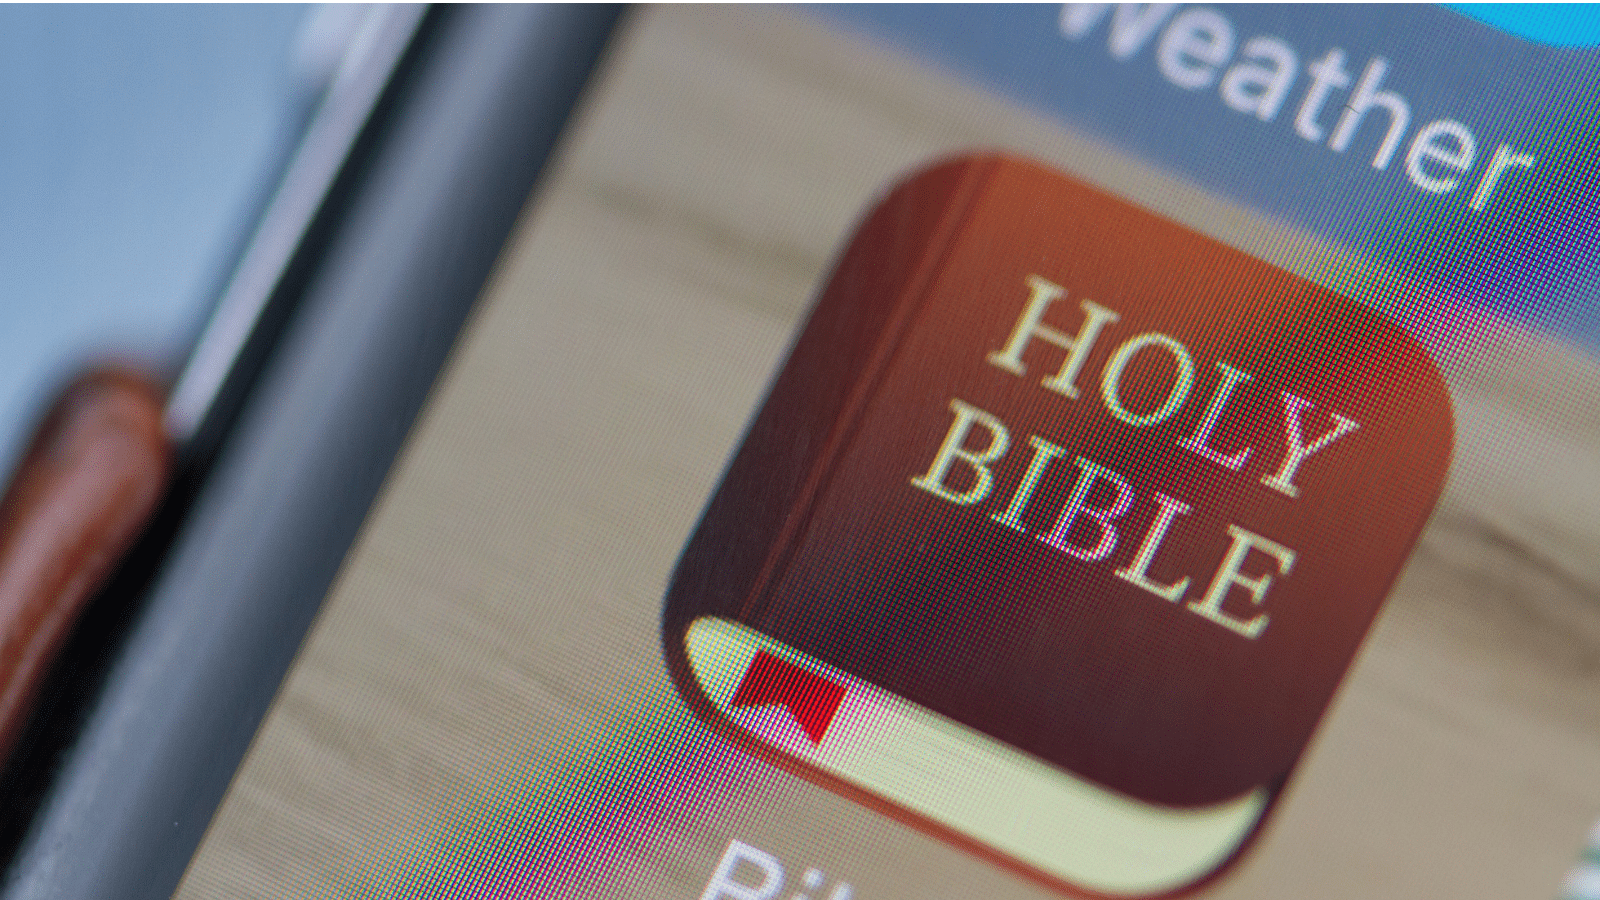 Bible app on phone